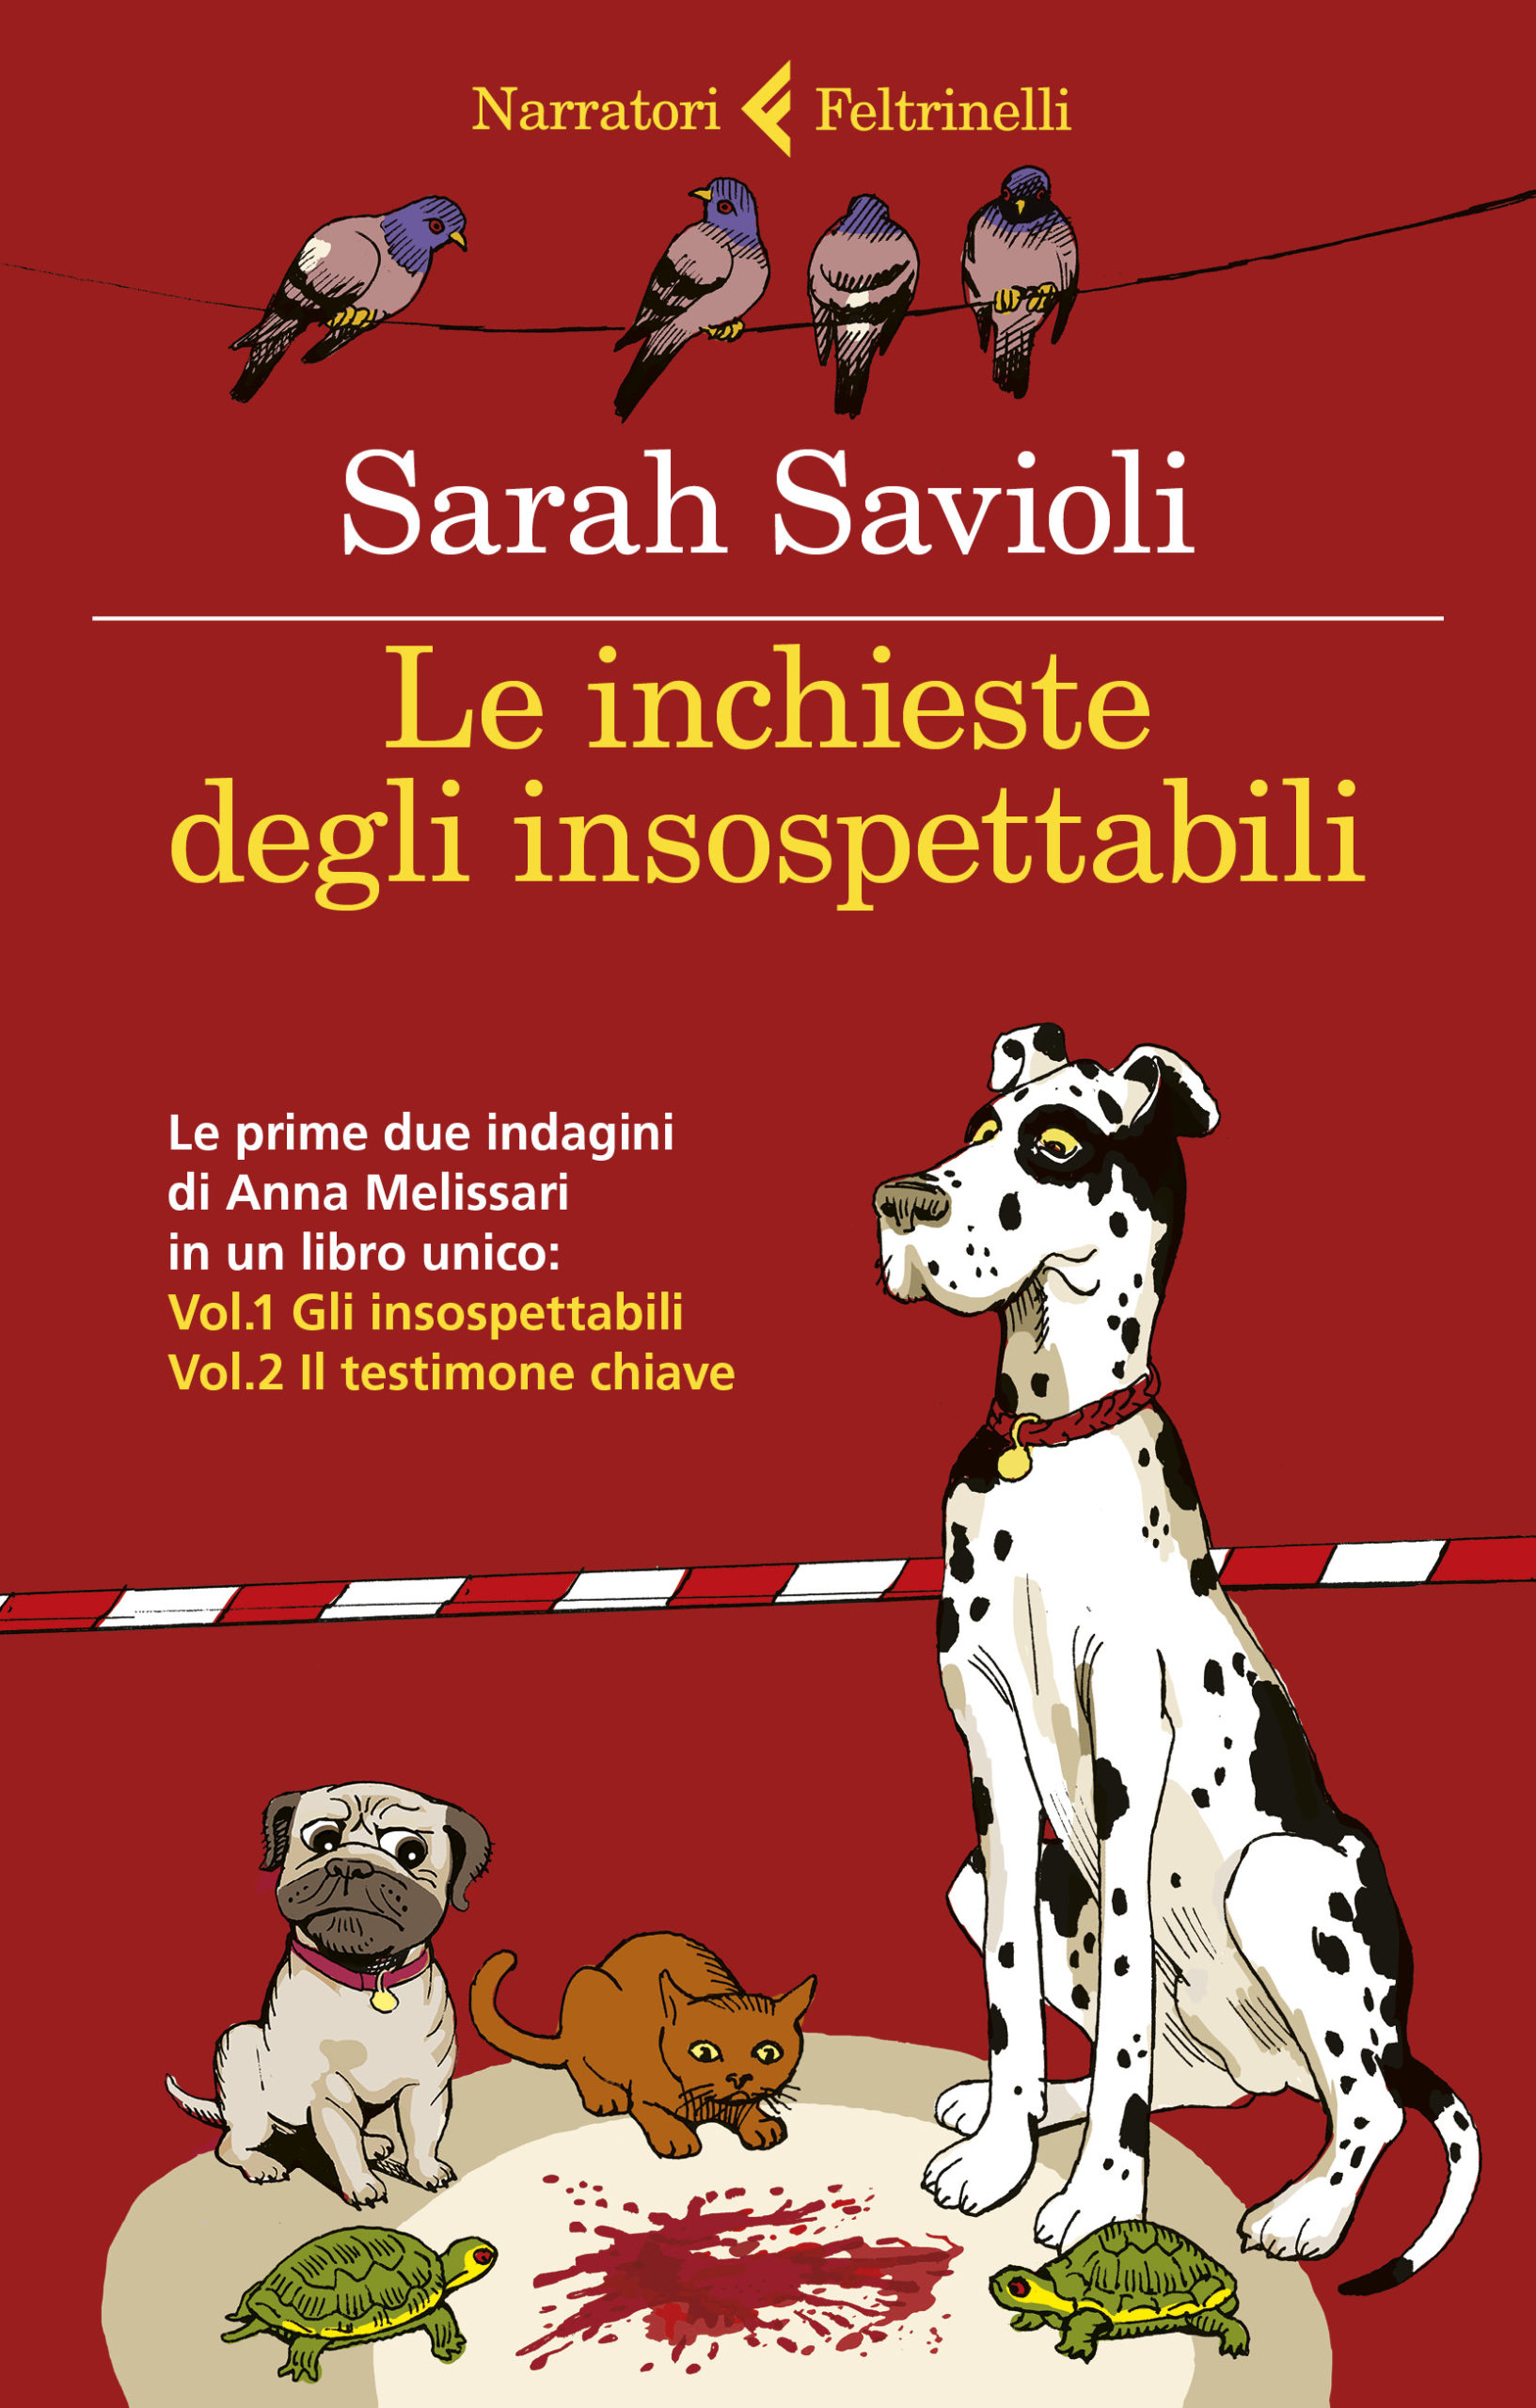 Feltrinelli new edition for Sarah Savioli